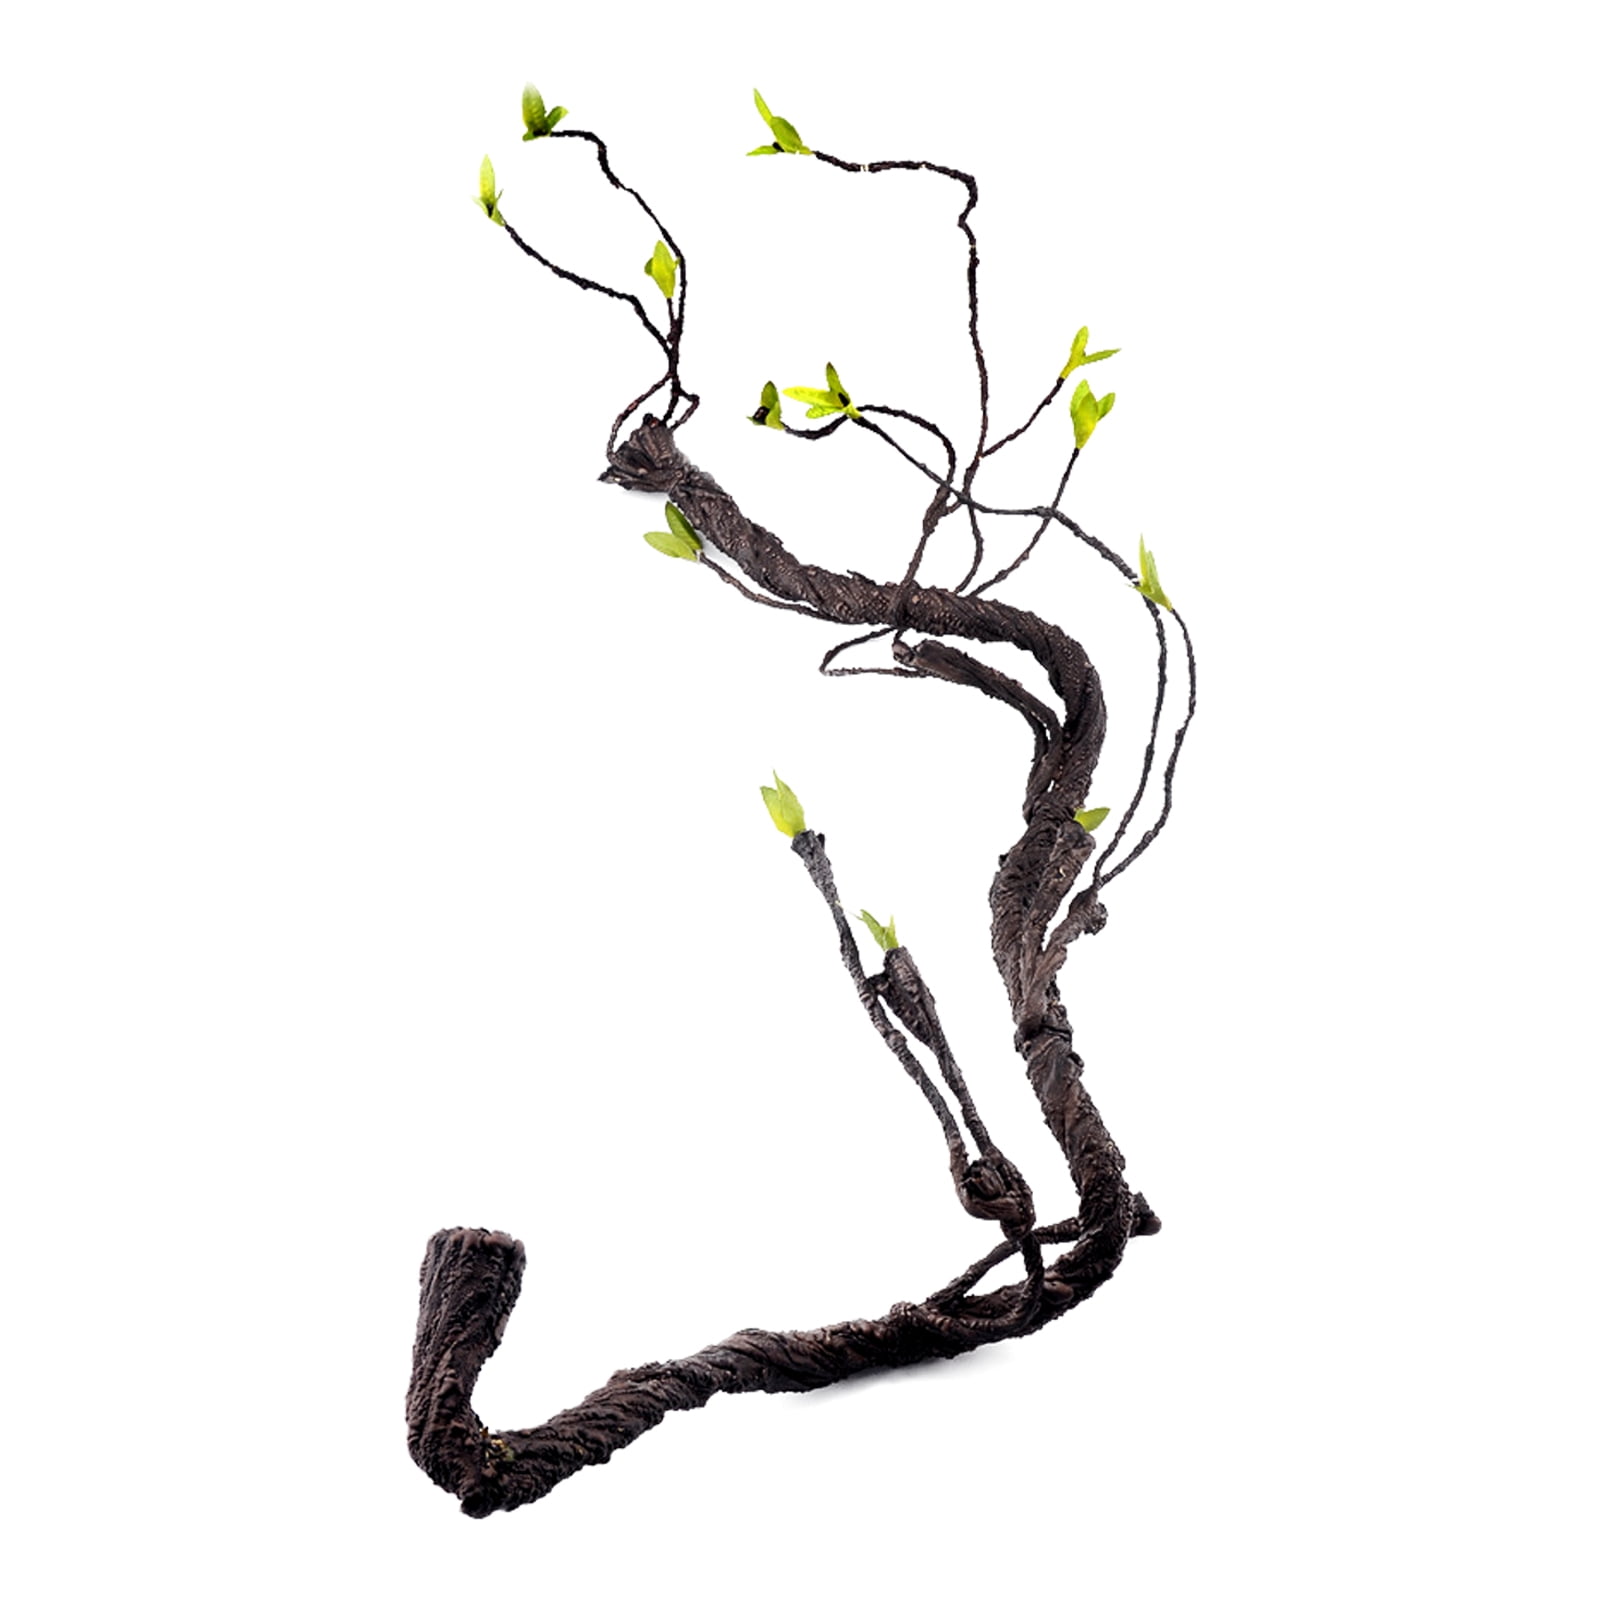 3 x Artificial Wooden Vine – 6’ Flexible Reptile Branch Jungle Vines GG1 S 